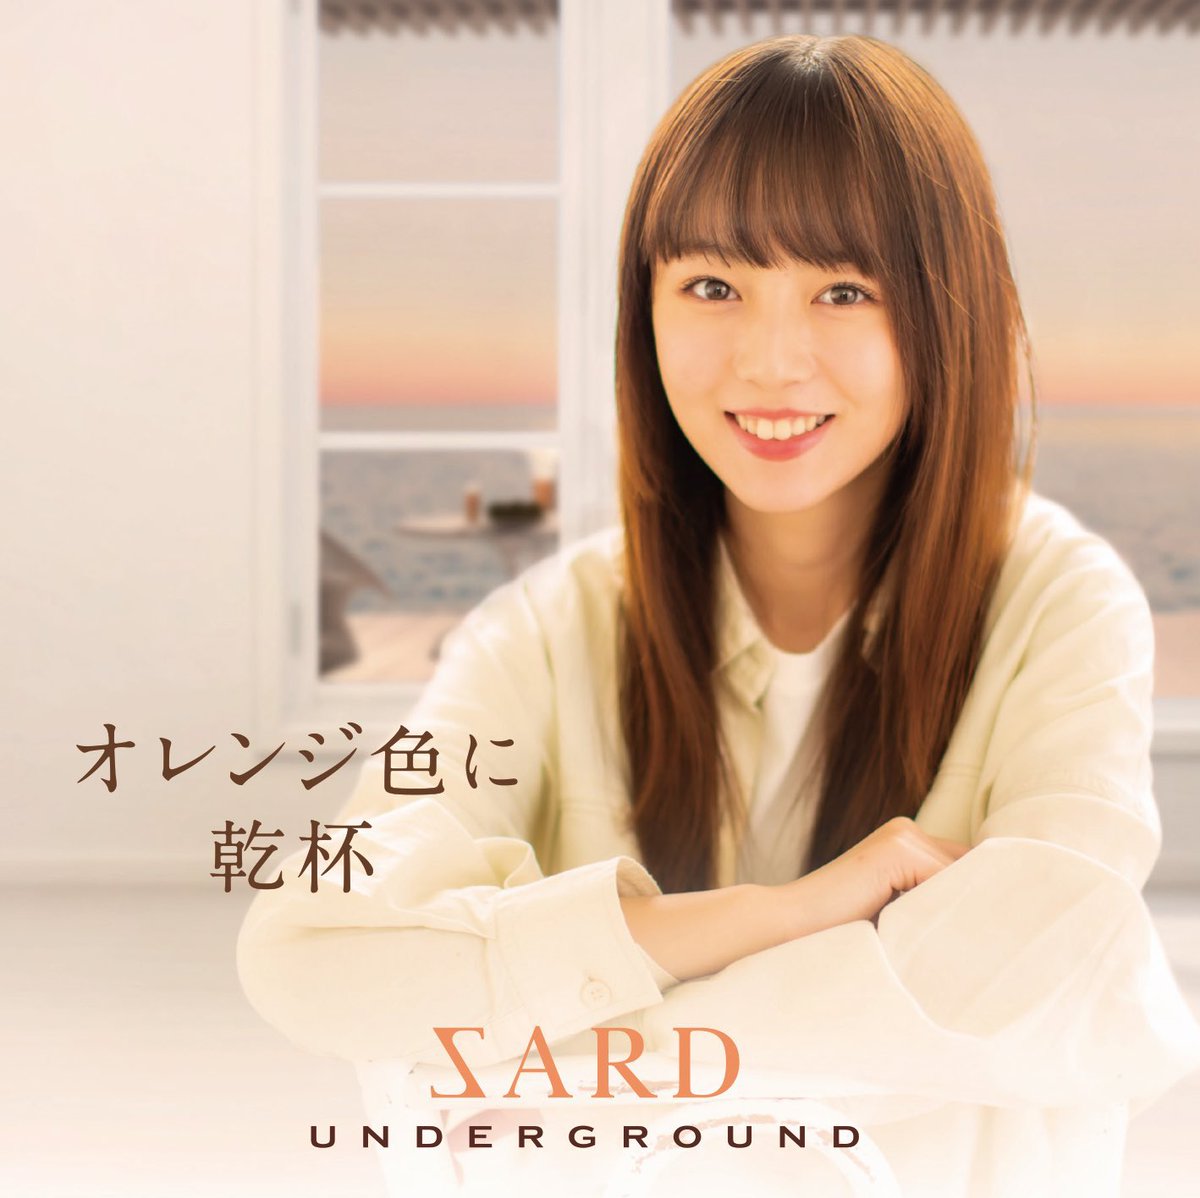 Cover for『SARD UNDERGROUND - Natsu no Owari ni...』from the release『Orange Iro ni Kanpai』